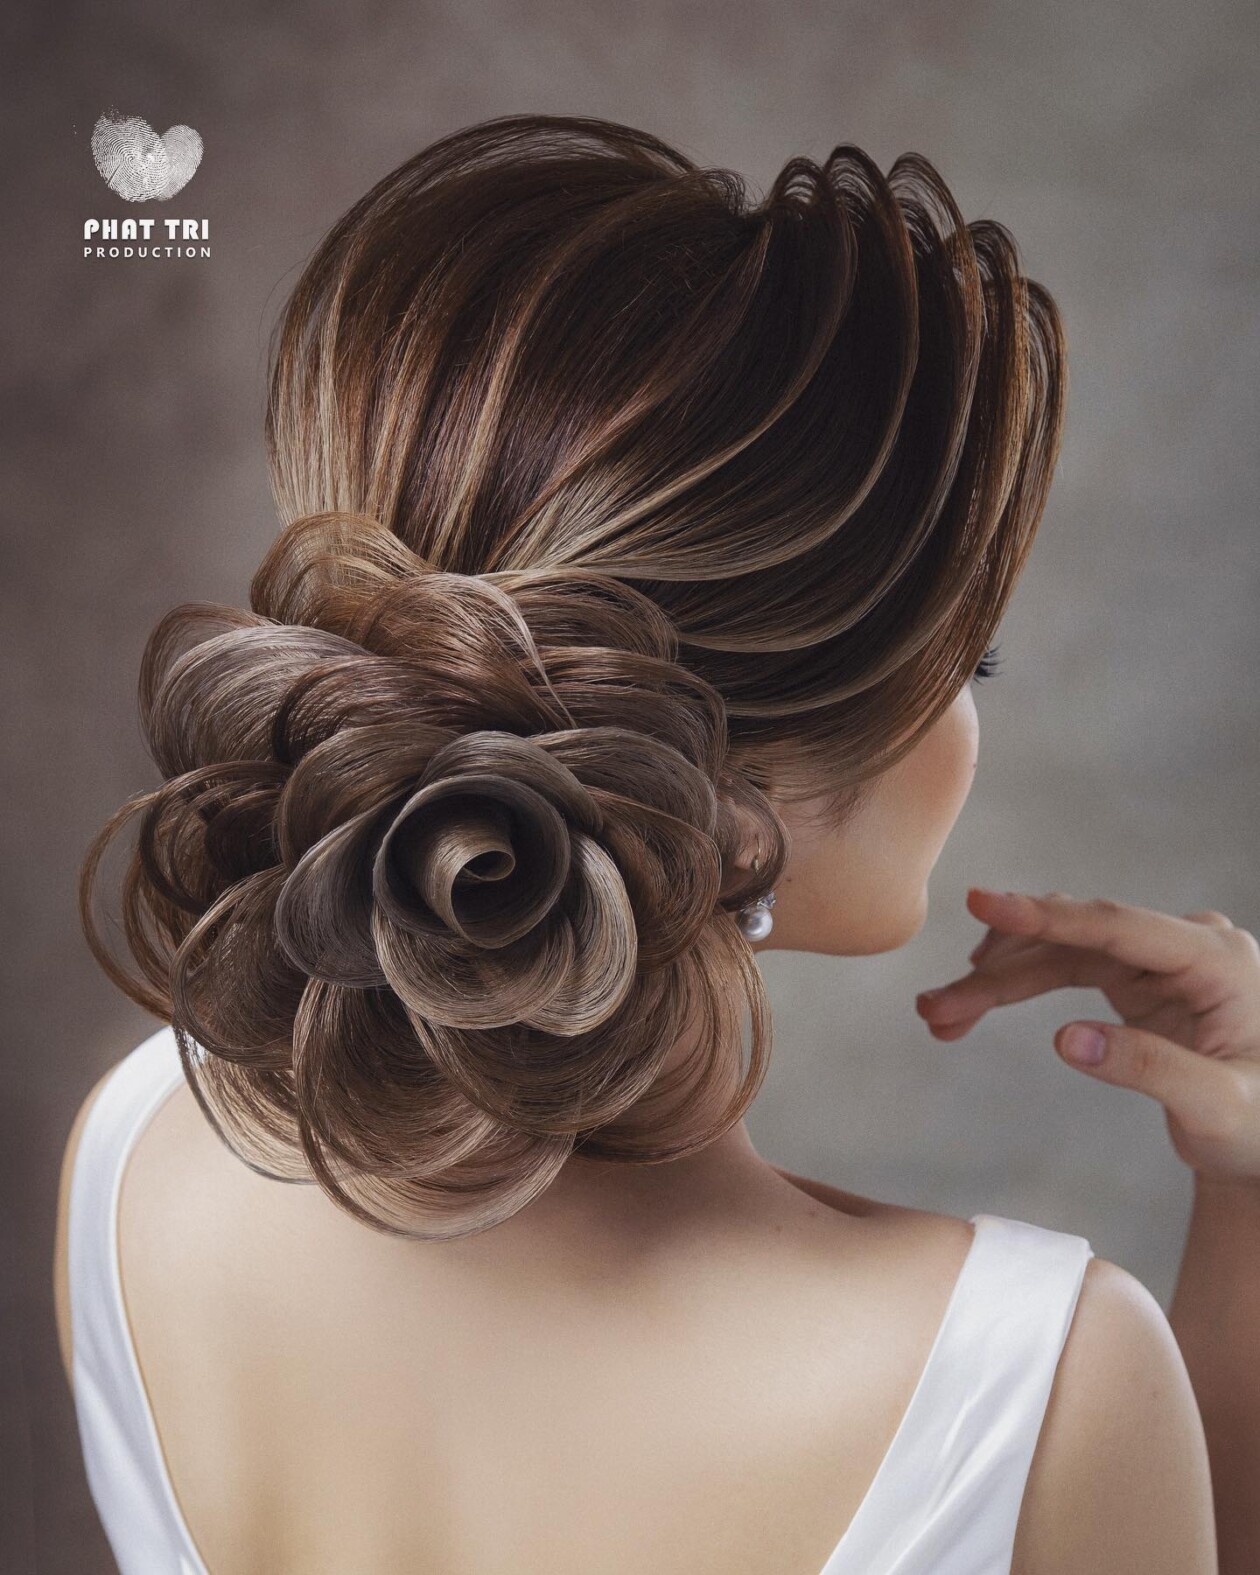 Beautiful Hairstyles That Look Like Ornate Flowers By Nguyen Phat Tri (8)